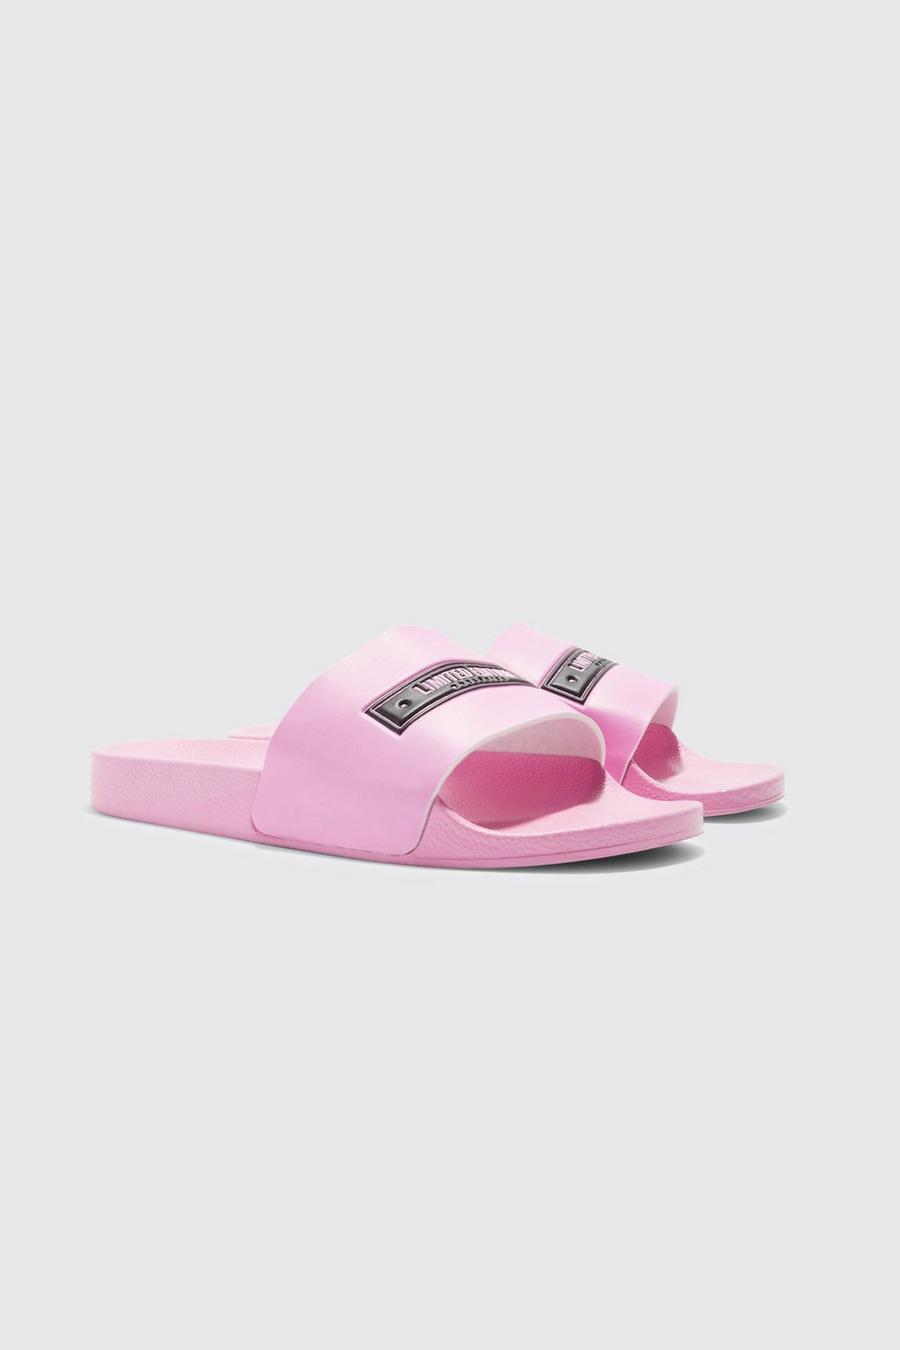 Limited Edition Slides, Pink rosa